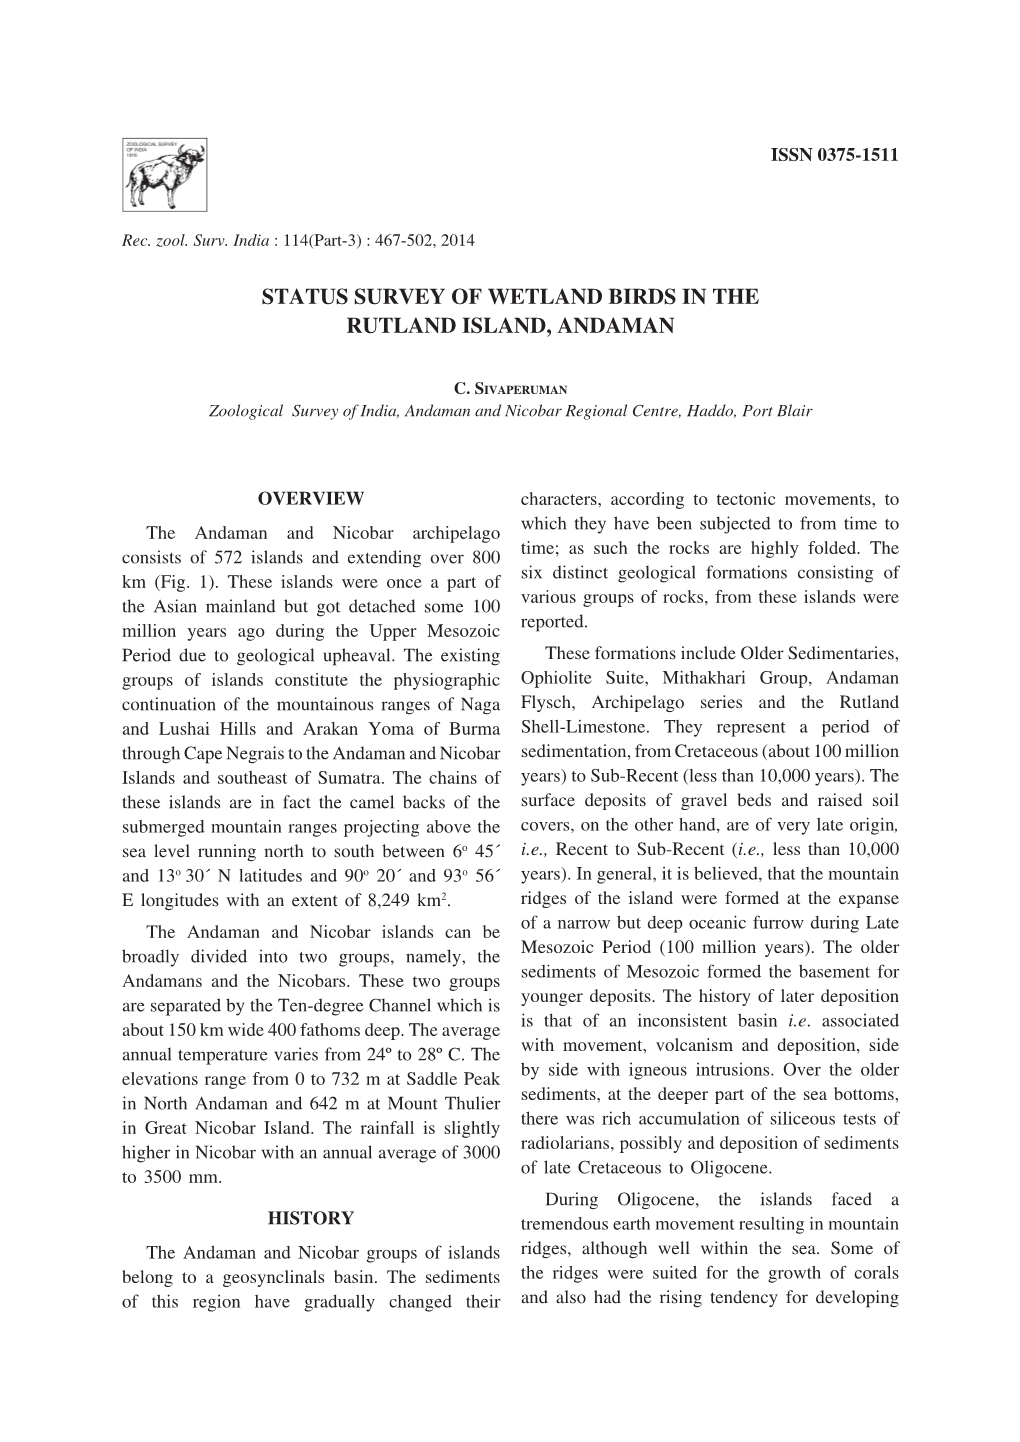 Status Survey of Wetland Birds in the Rutland Island, Andaman ISSN 0375-1511467